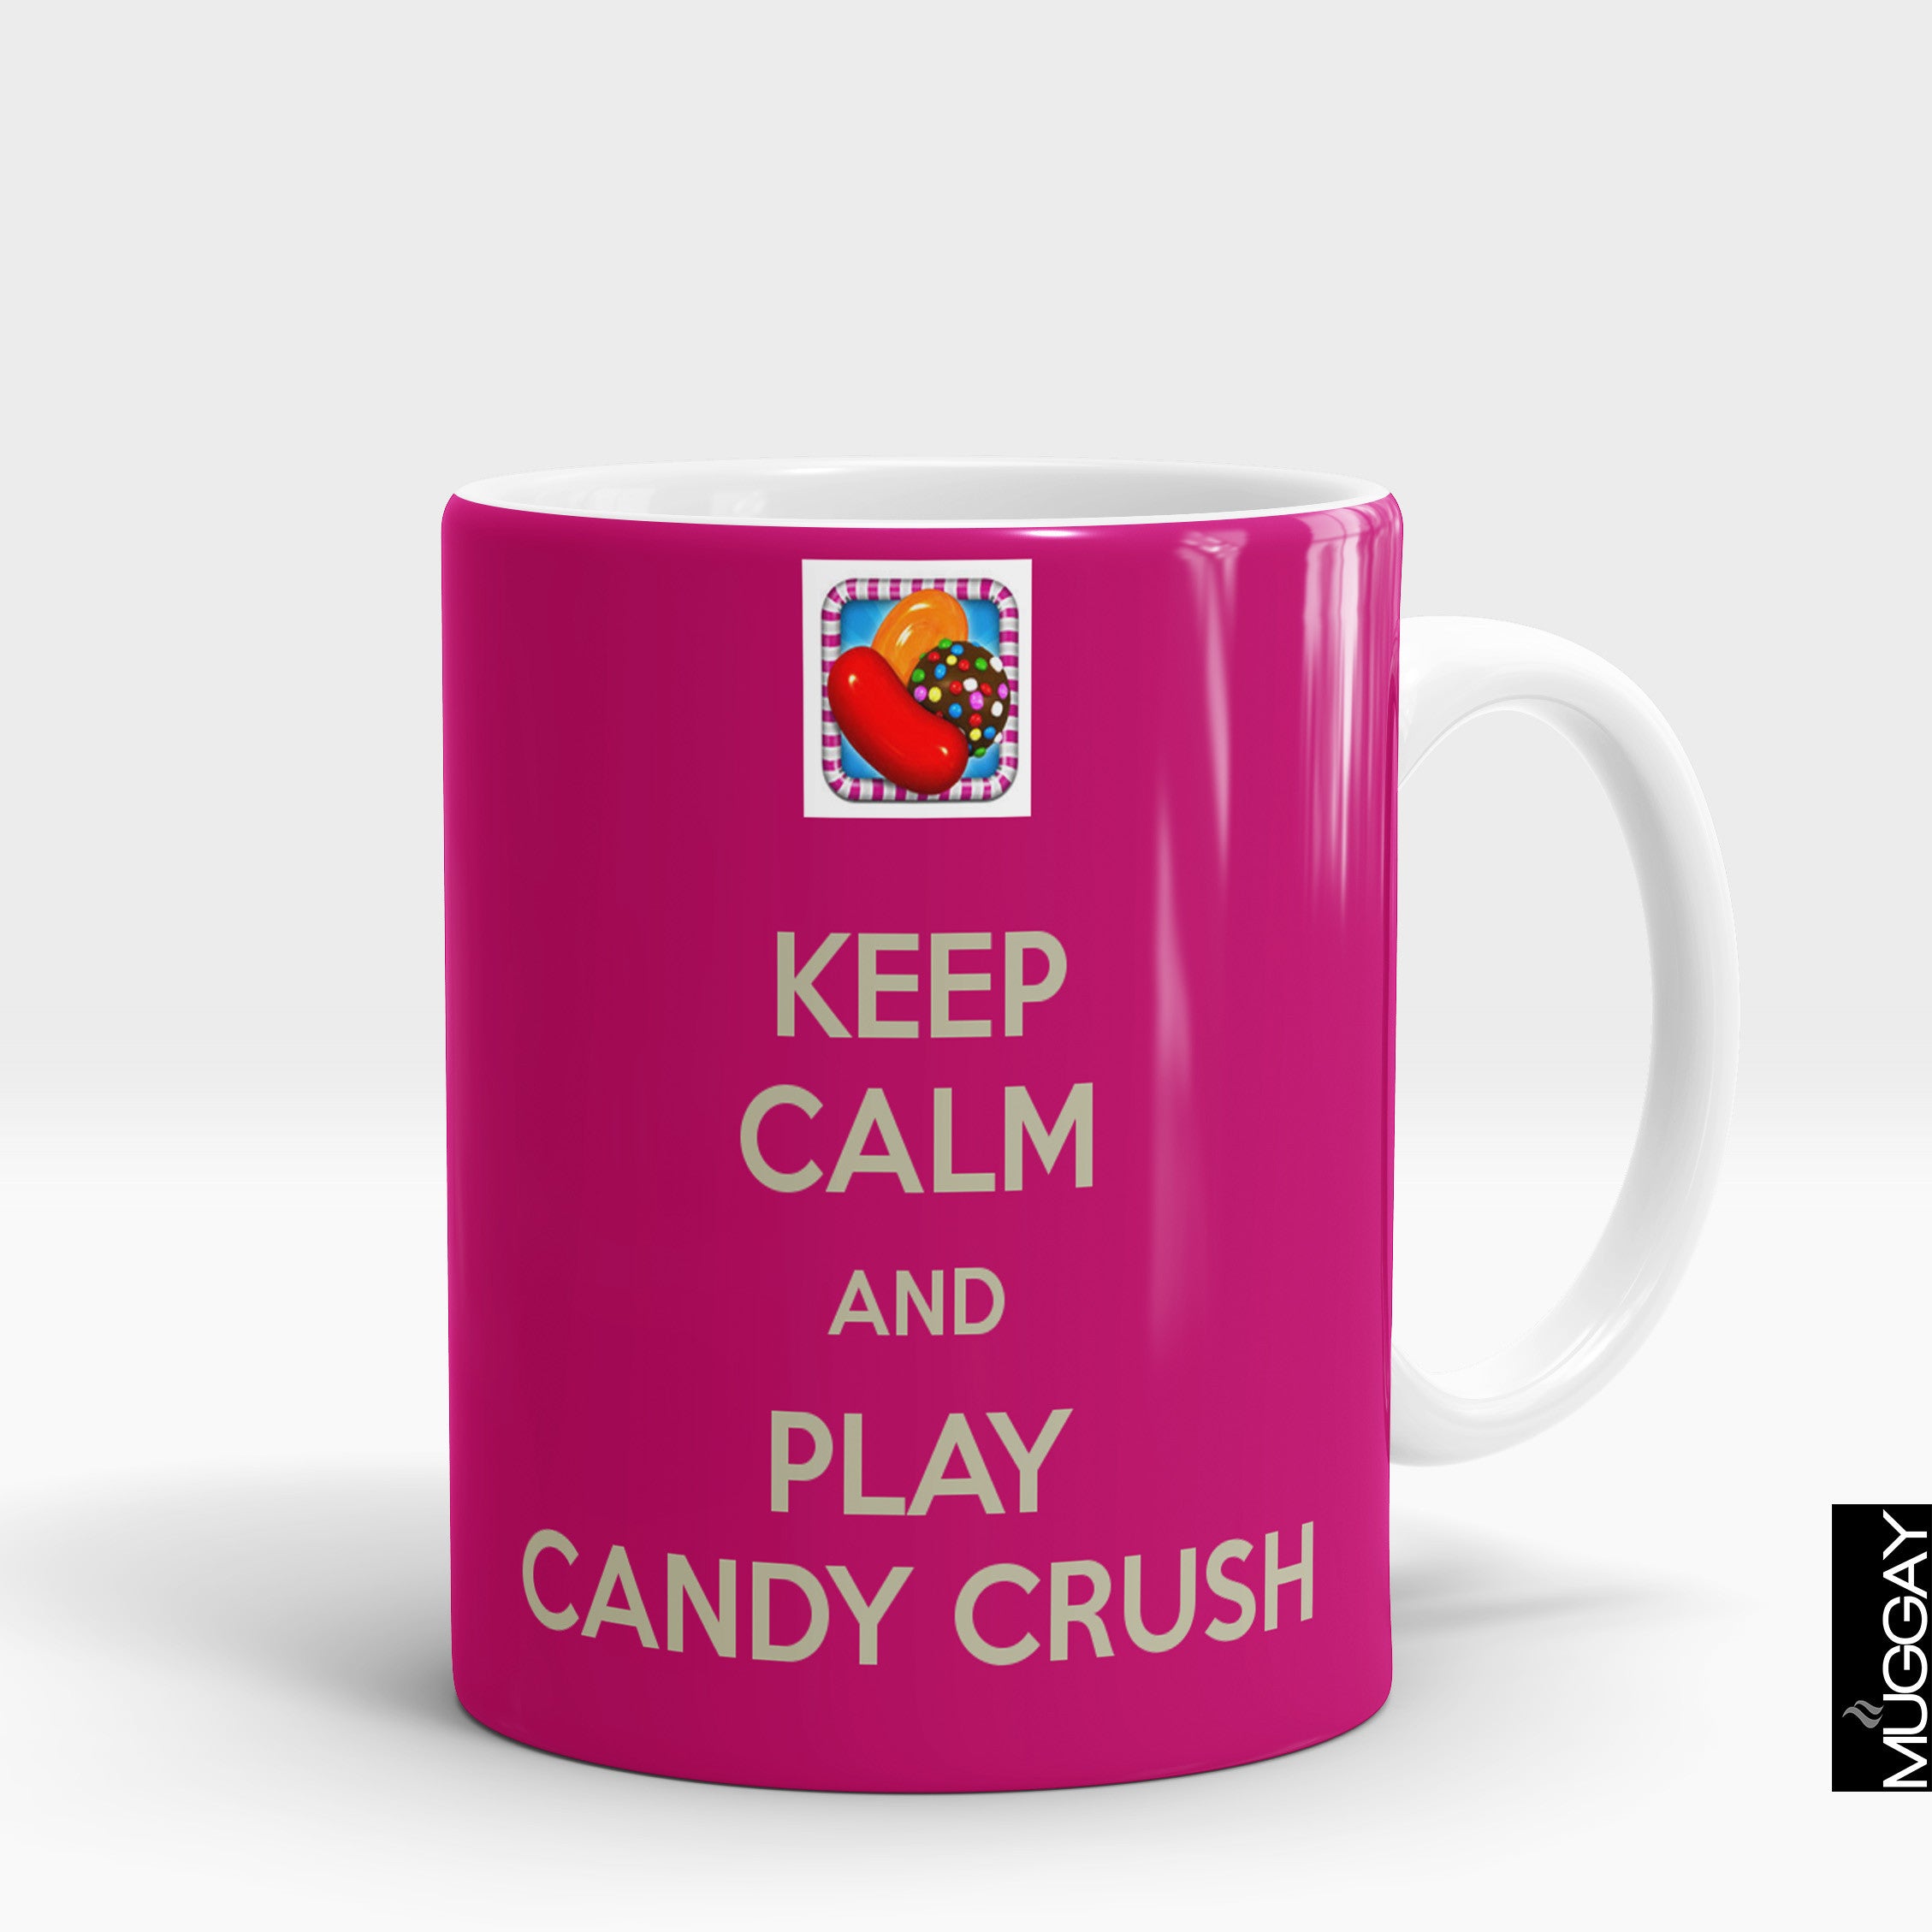 Candy crush Design candy2 - Muggay.com - Mugs - Printing shop - truck Art mugs - Mug printing - Customized printing - Digital printing - Muggay 